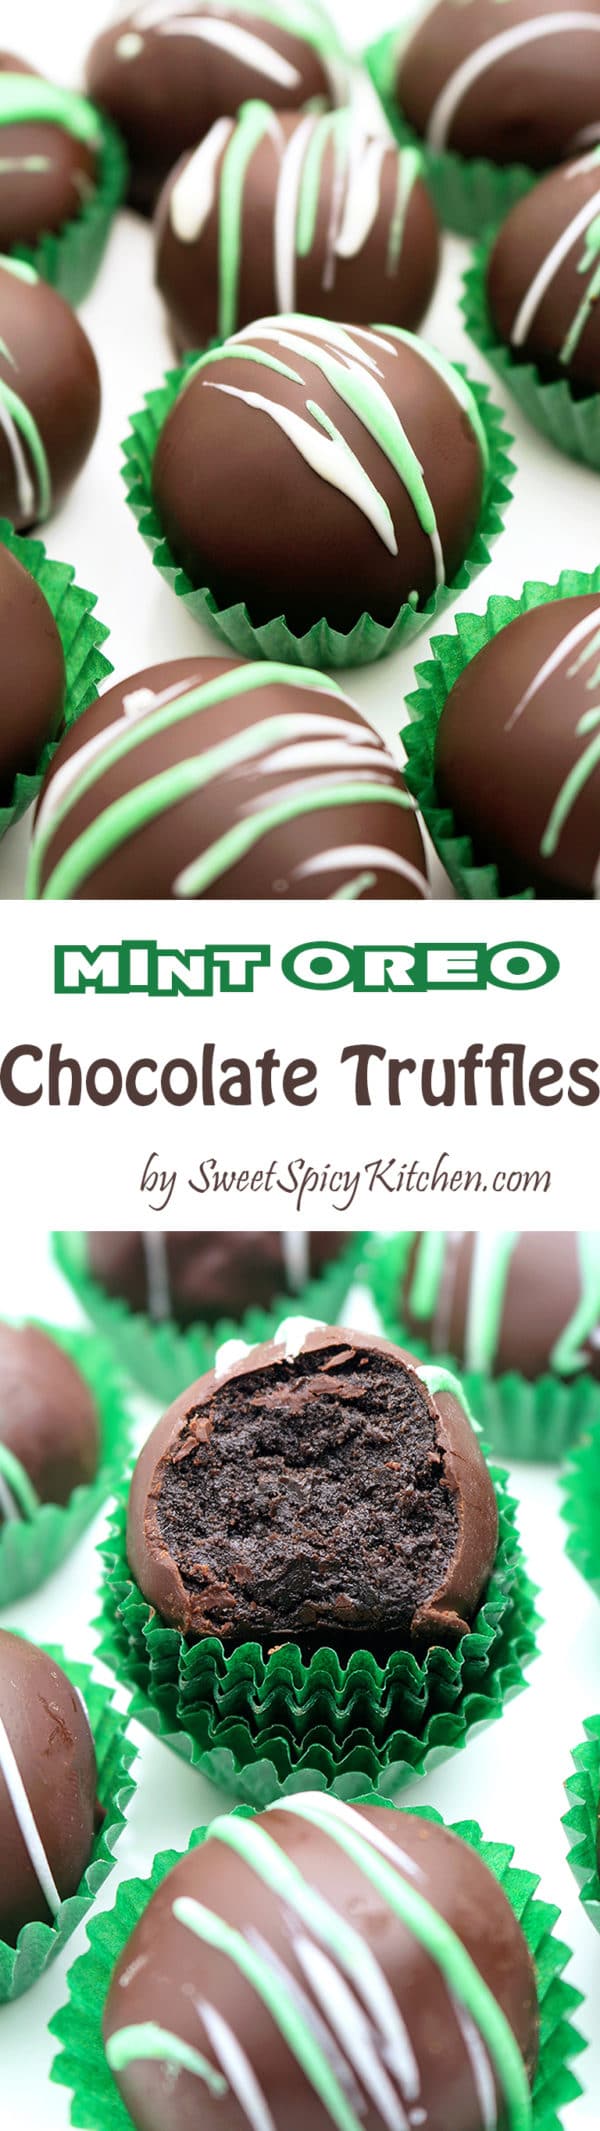 Mint Oreo Chocolate Truffles